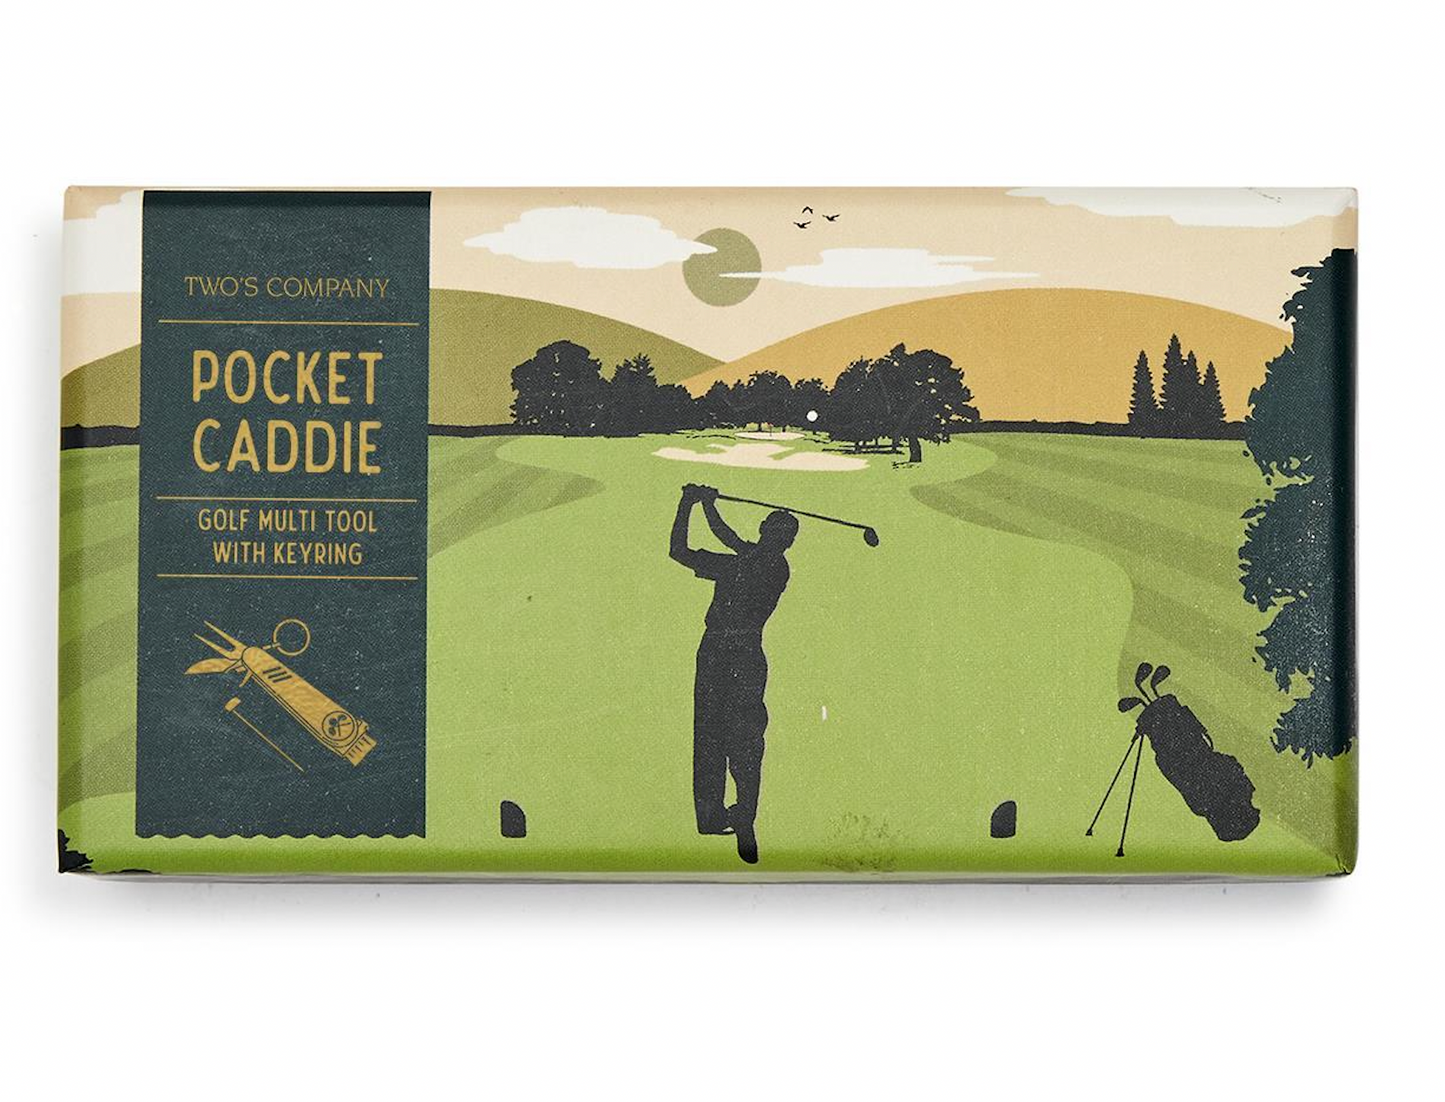 Pocket Caddie 7-in-1 Golf Mult Tool